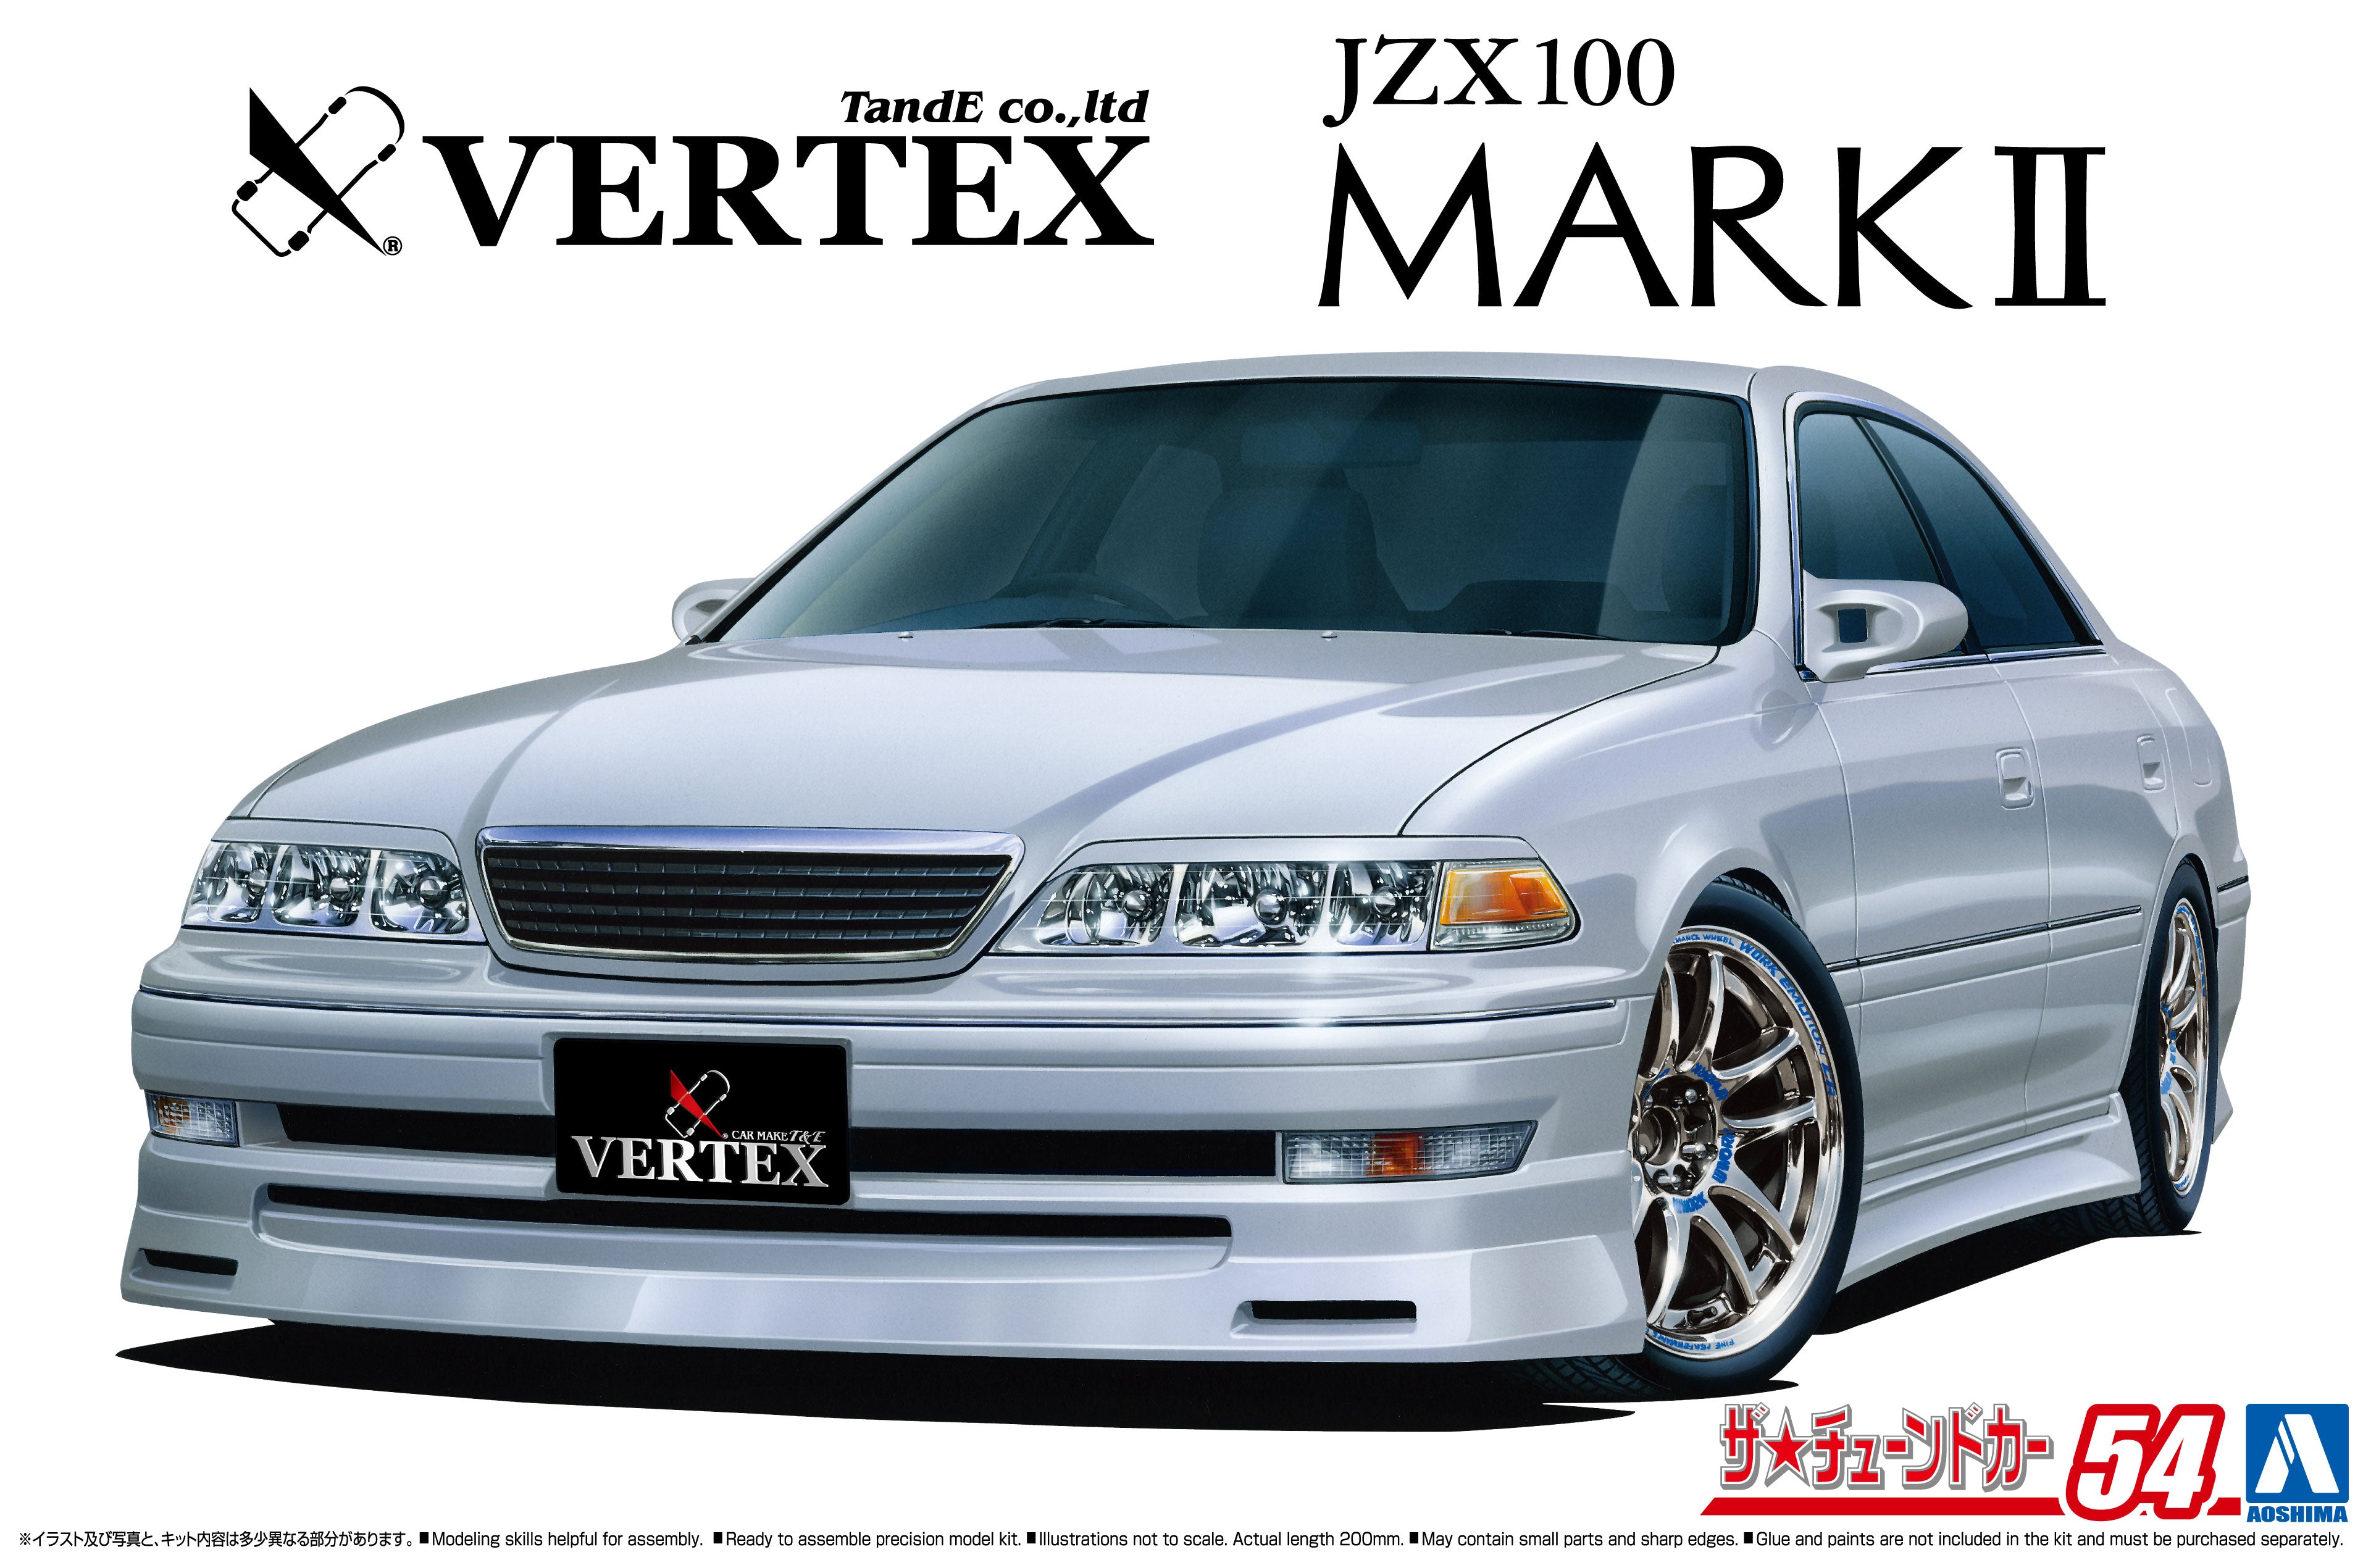 Aoshima Model Kits: Toyota - Vertex Jzx100Mark Tourer V 98 Escala 1/24 Kit De Plastico